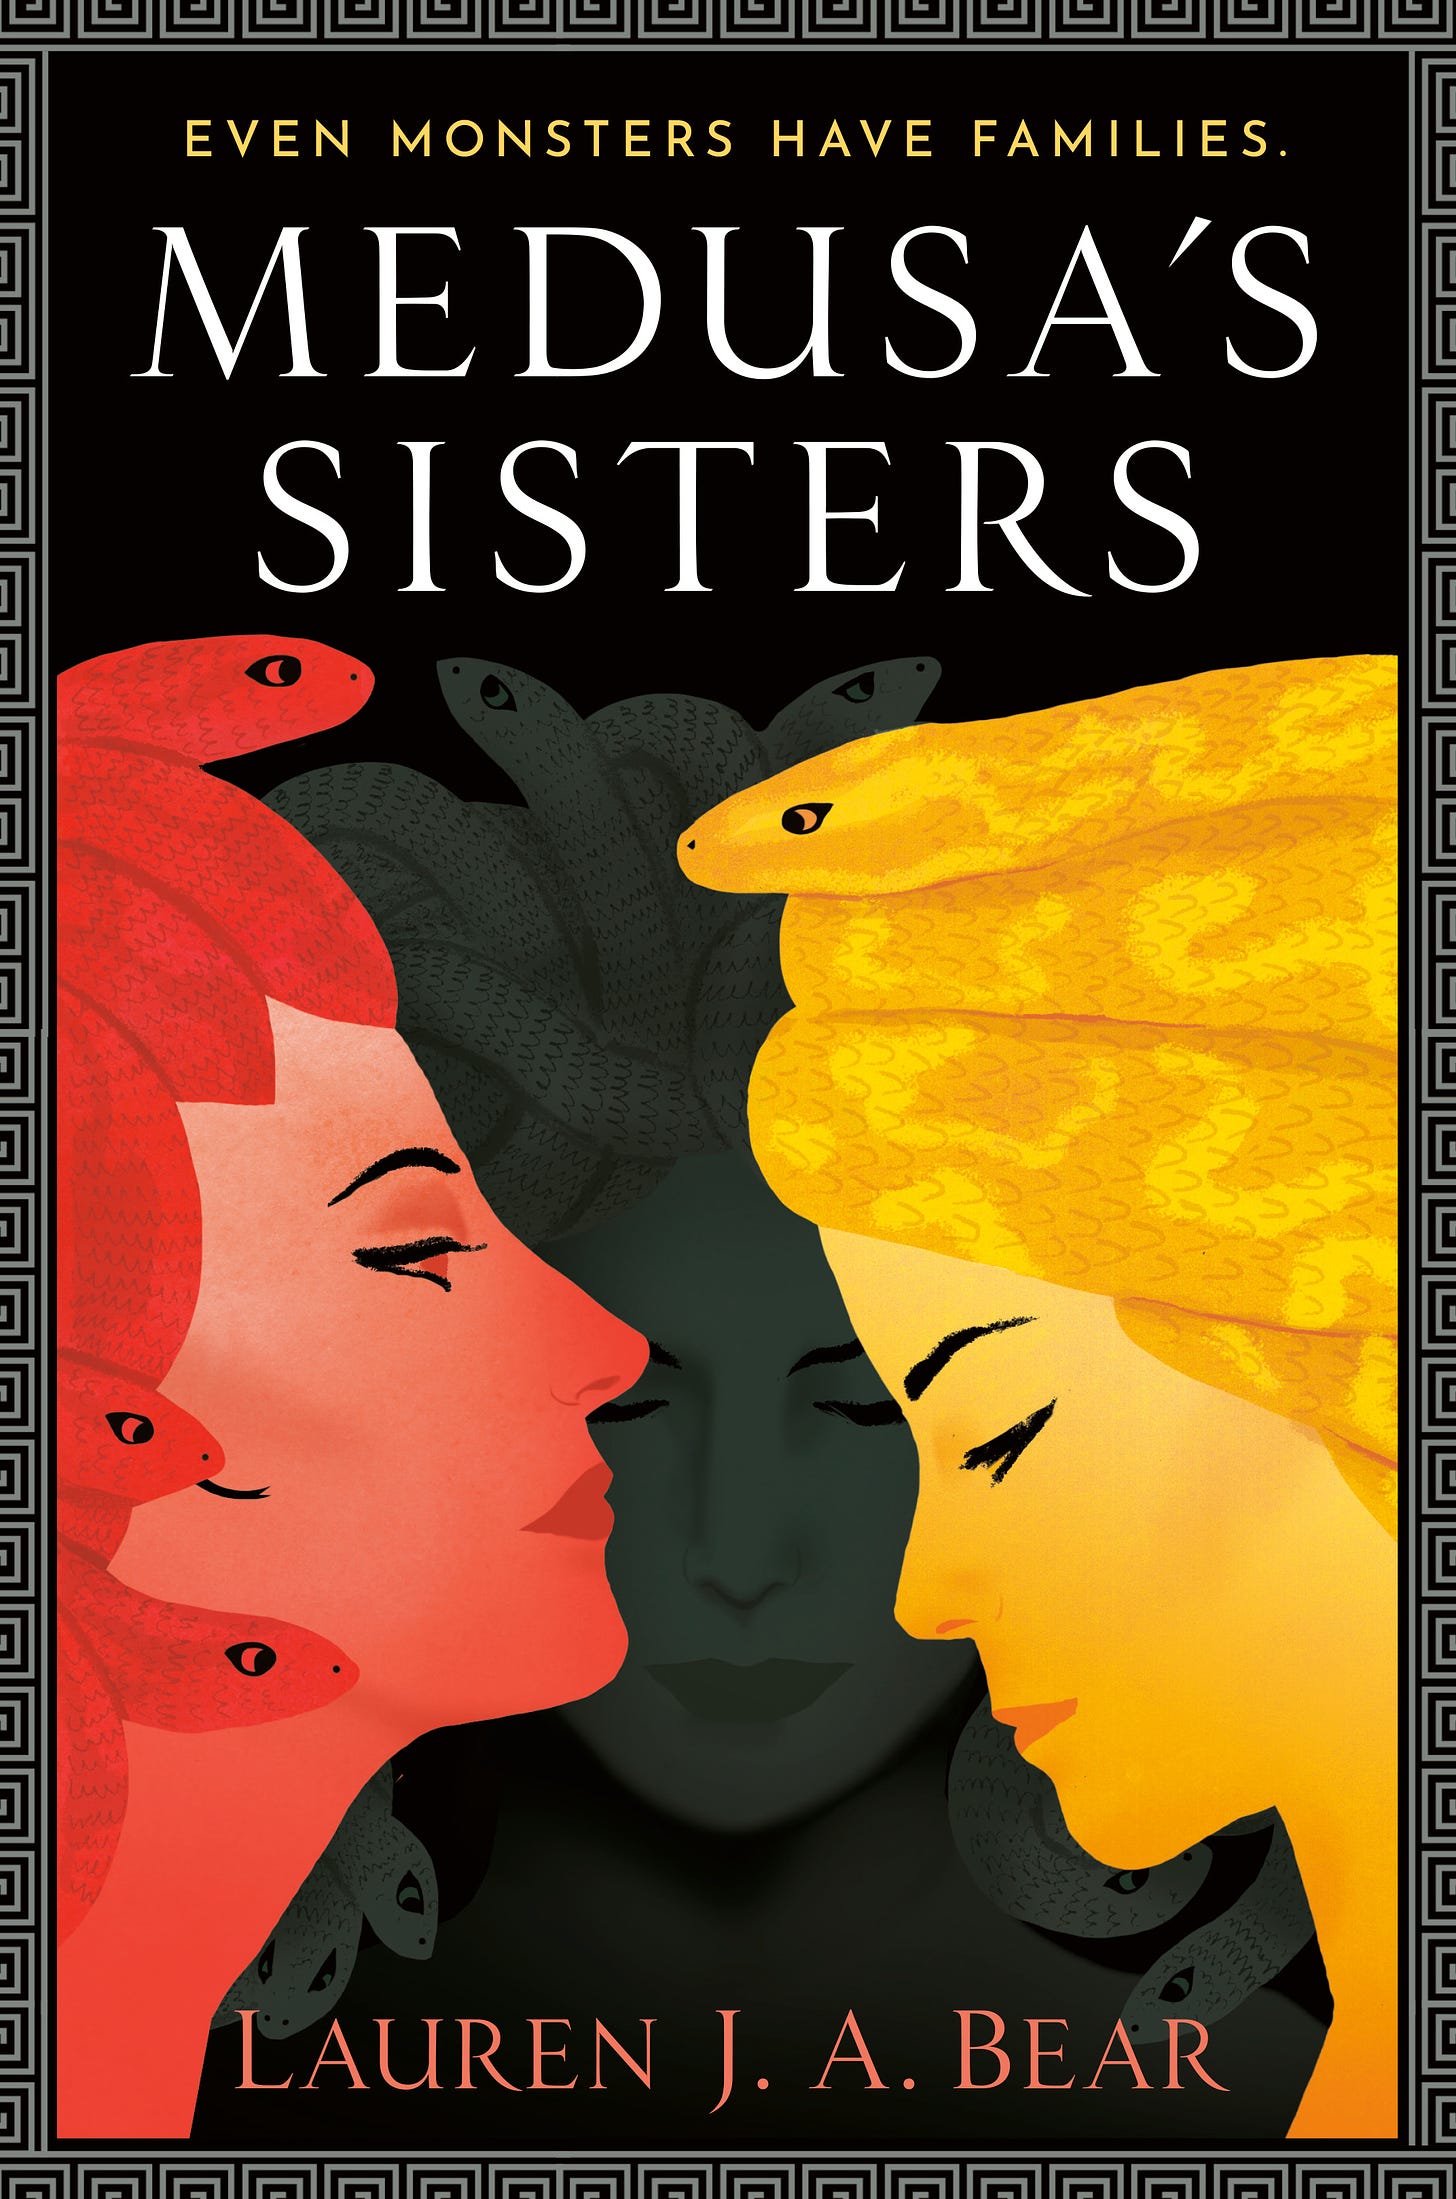 Medusa's Sisters by Lauren J.A. Bear | Goodreads